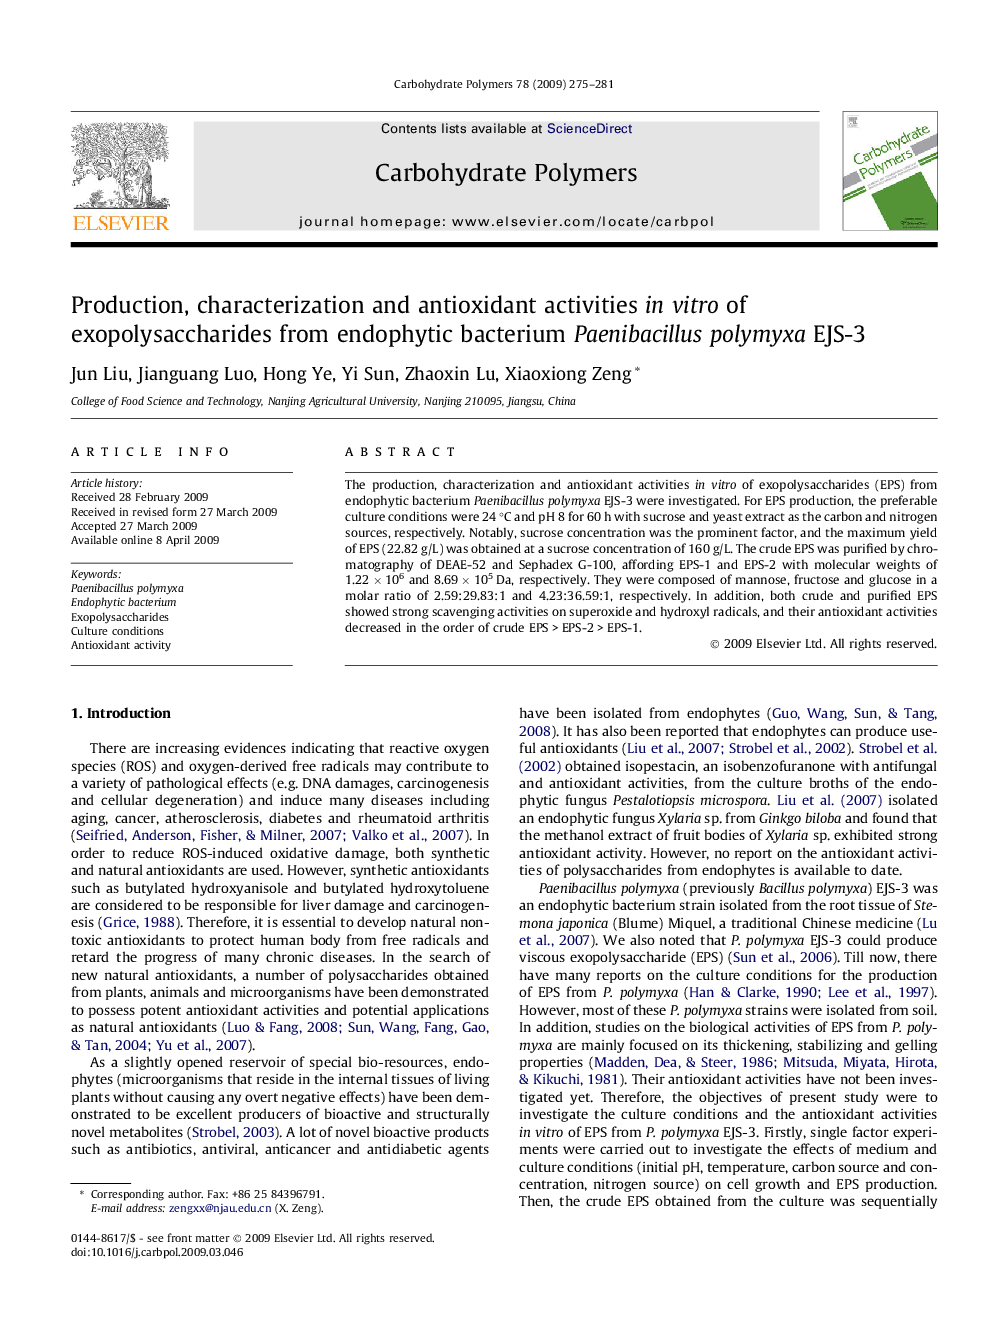 Production, characterization and antioxidant activities in vitro of exopolysaccharides from endophytic bacterium Paenibacillus polymyxa EJS-3